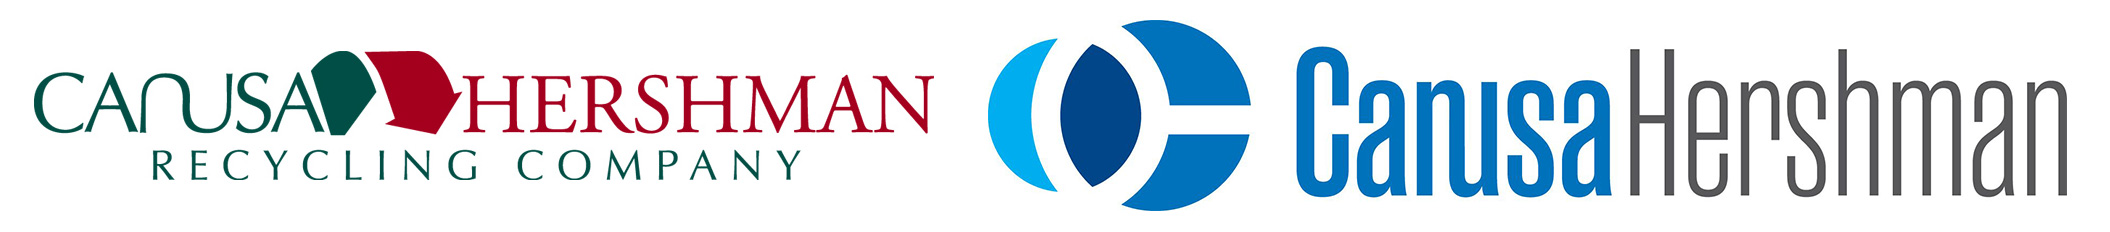 Canusa Hershman Recycling Company Logo